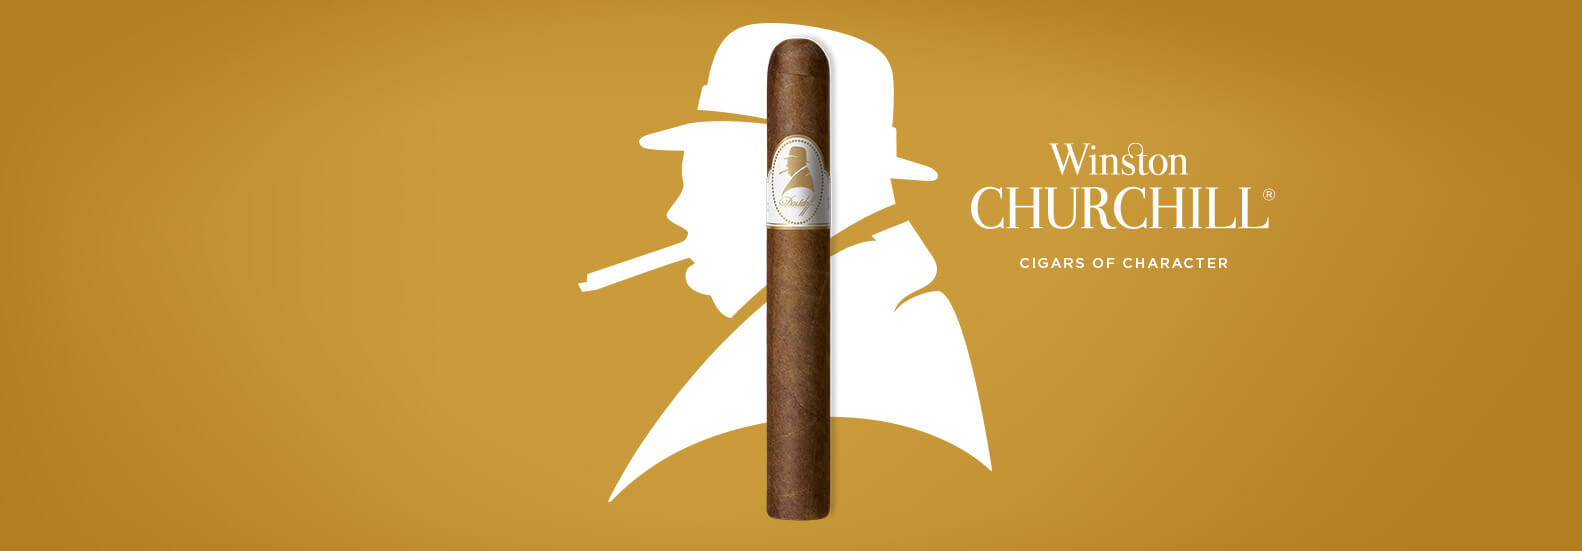 Davidoff Winston Churchill Original Series Cigar on top of the Winston Churchill Logo